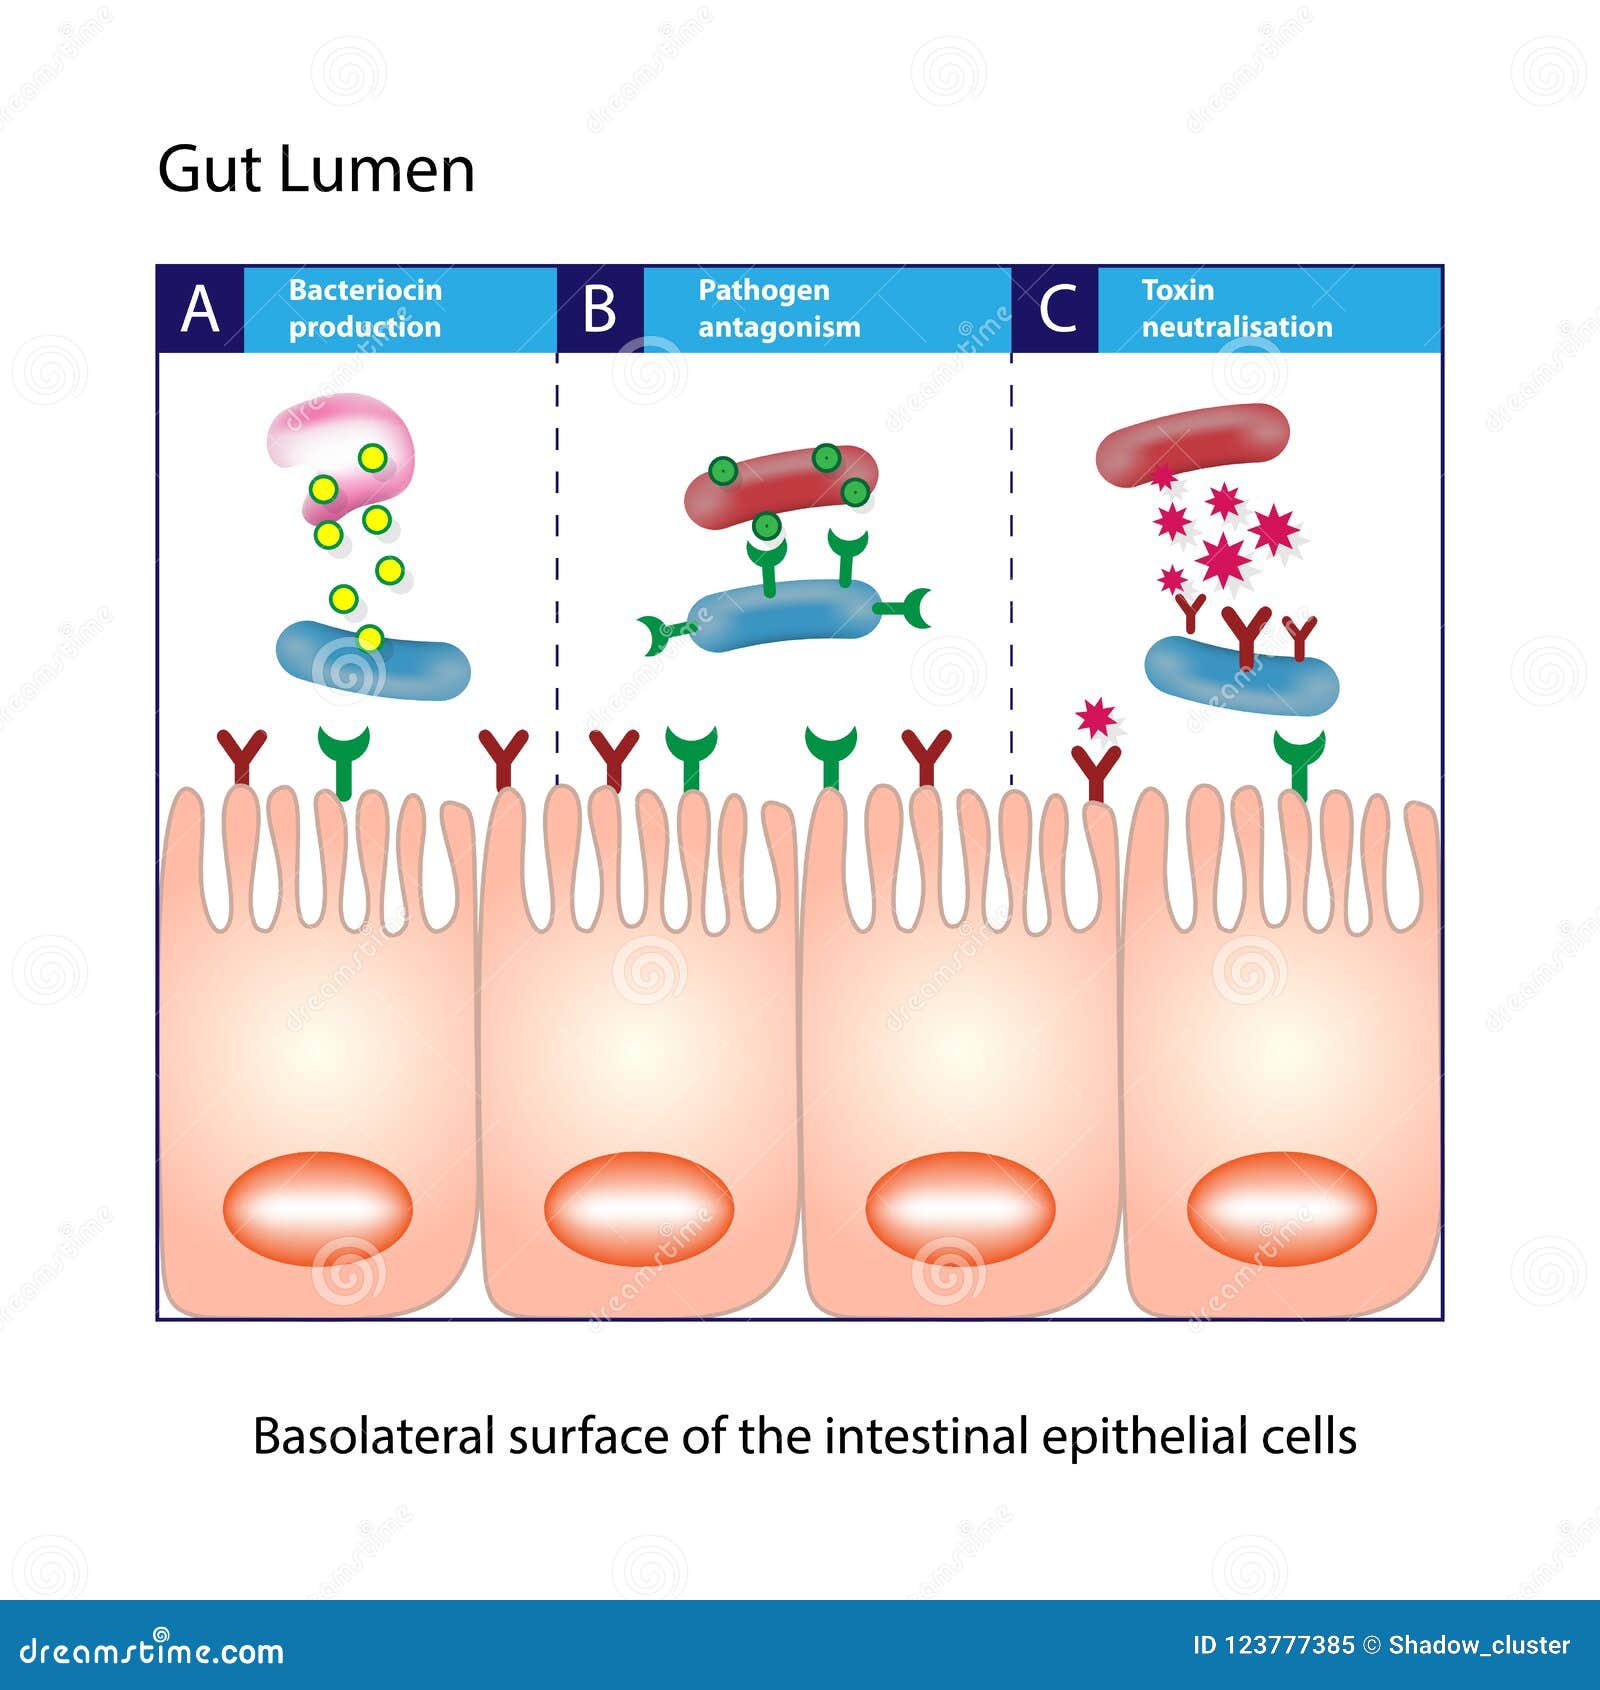 gut lumen. columnar epithelial cells